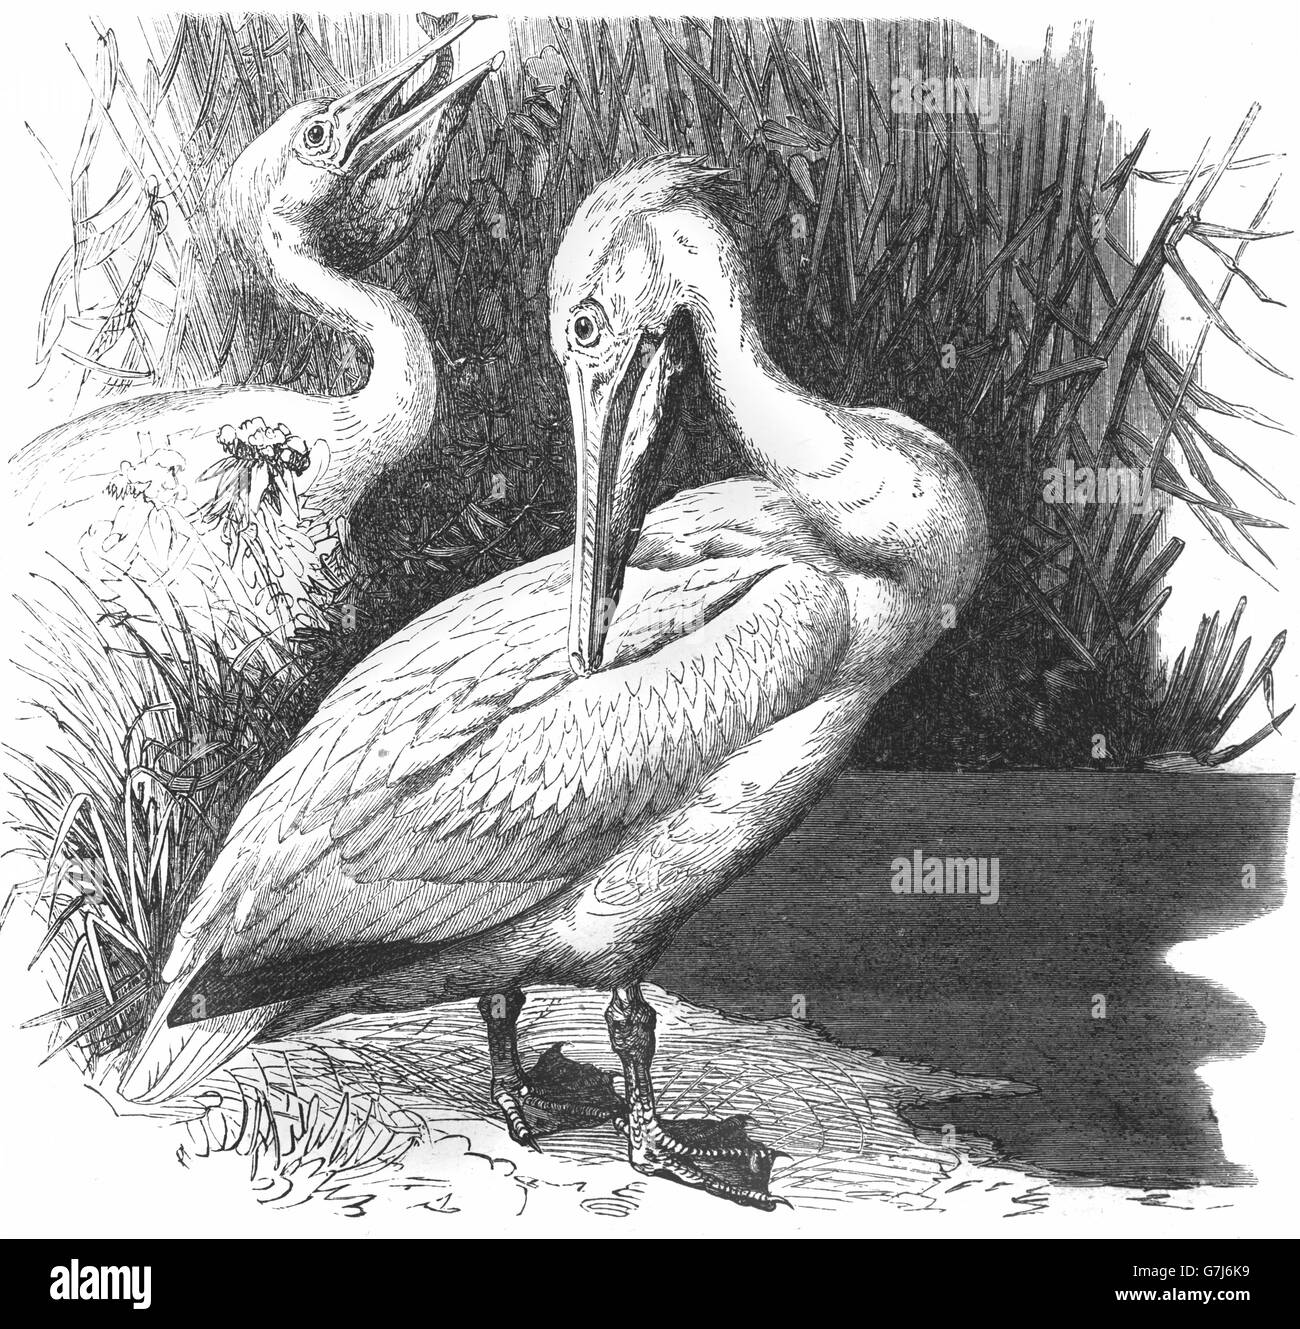 Rosapelikan, Pelecanus Onocrotalus, rosigen Pelikan, Pelecanidae, Illustration aus Buch datiert 1904 Stockfoto